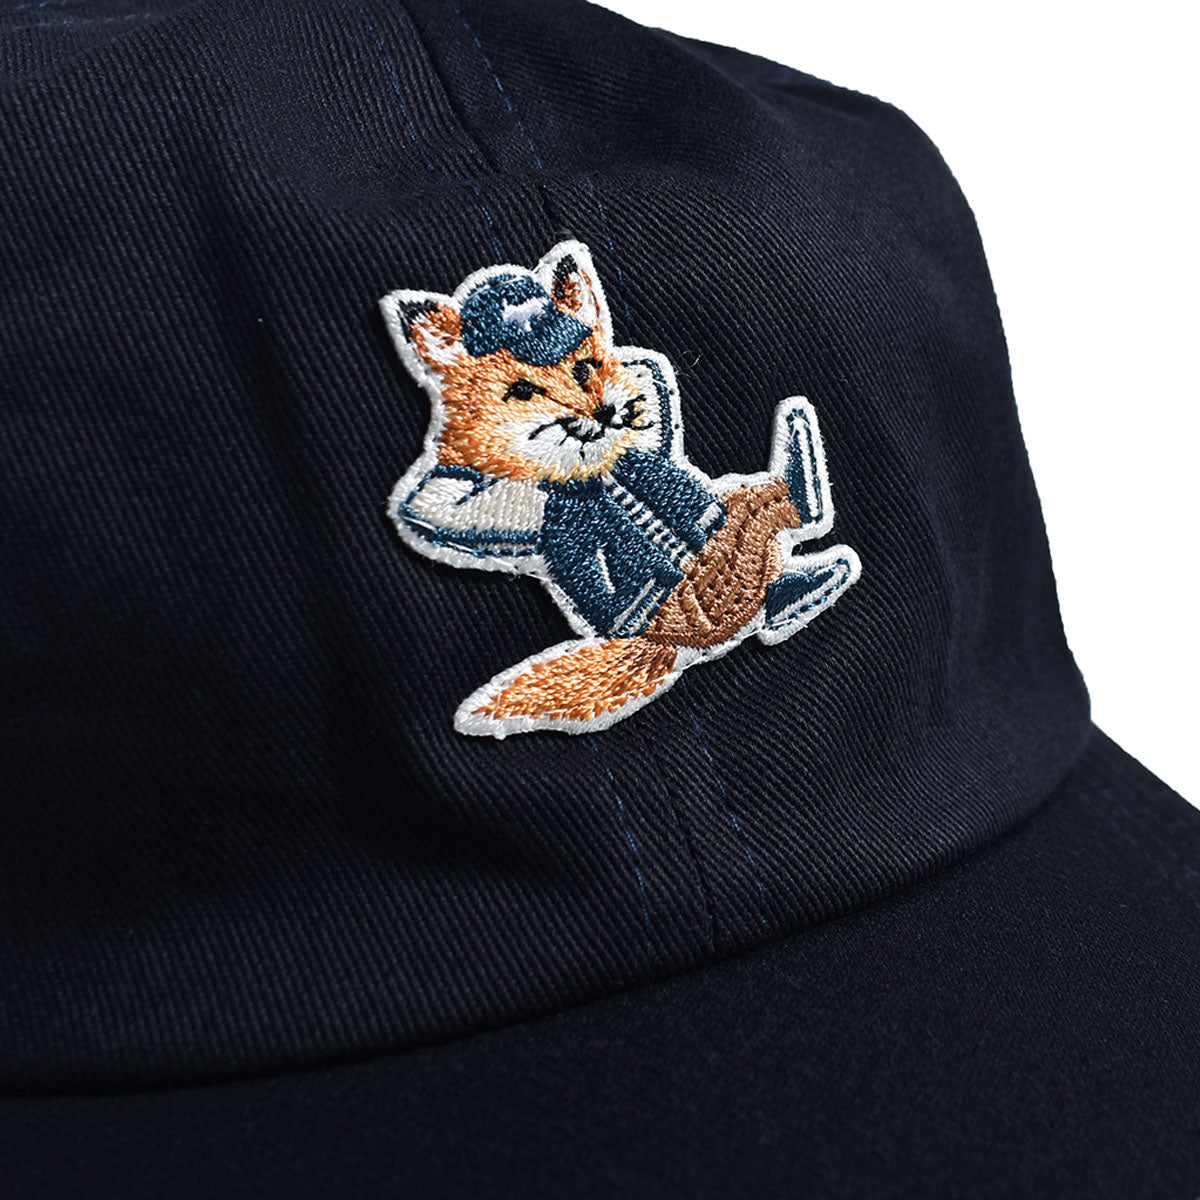 【Maison Kitsune】スウェット Big Fox ロゴ刺繍 Navy